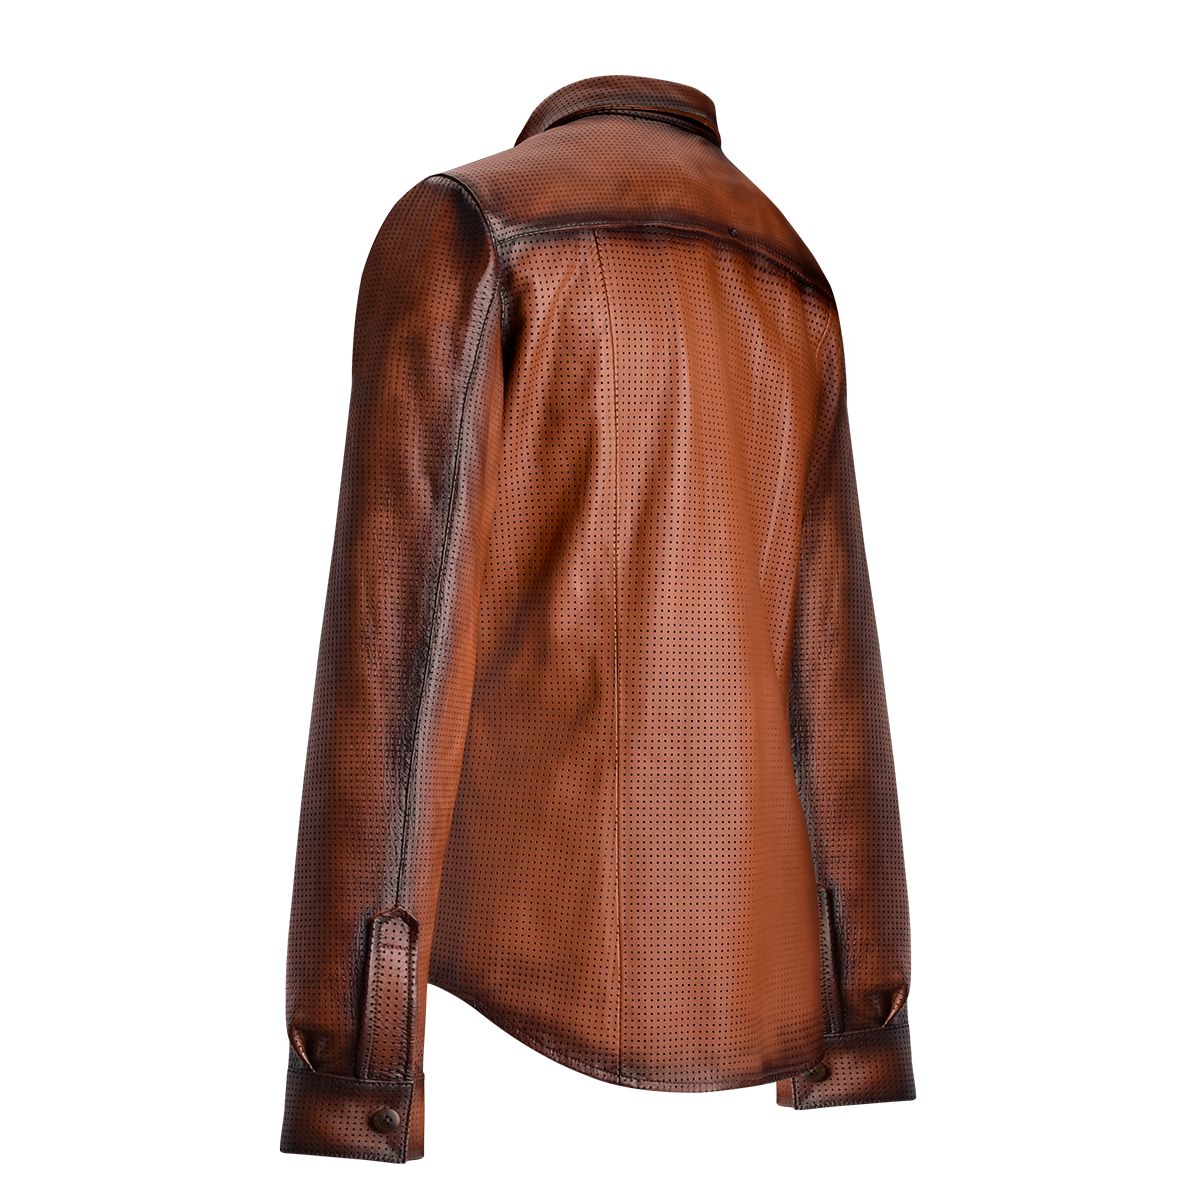 H280COC - Cuadra vegetal brown western fashion leather shirt jacket for men-CUADRA-Kuet-Cuadra-Boots